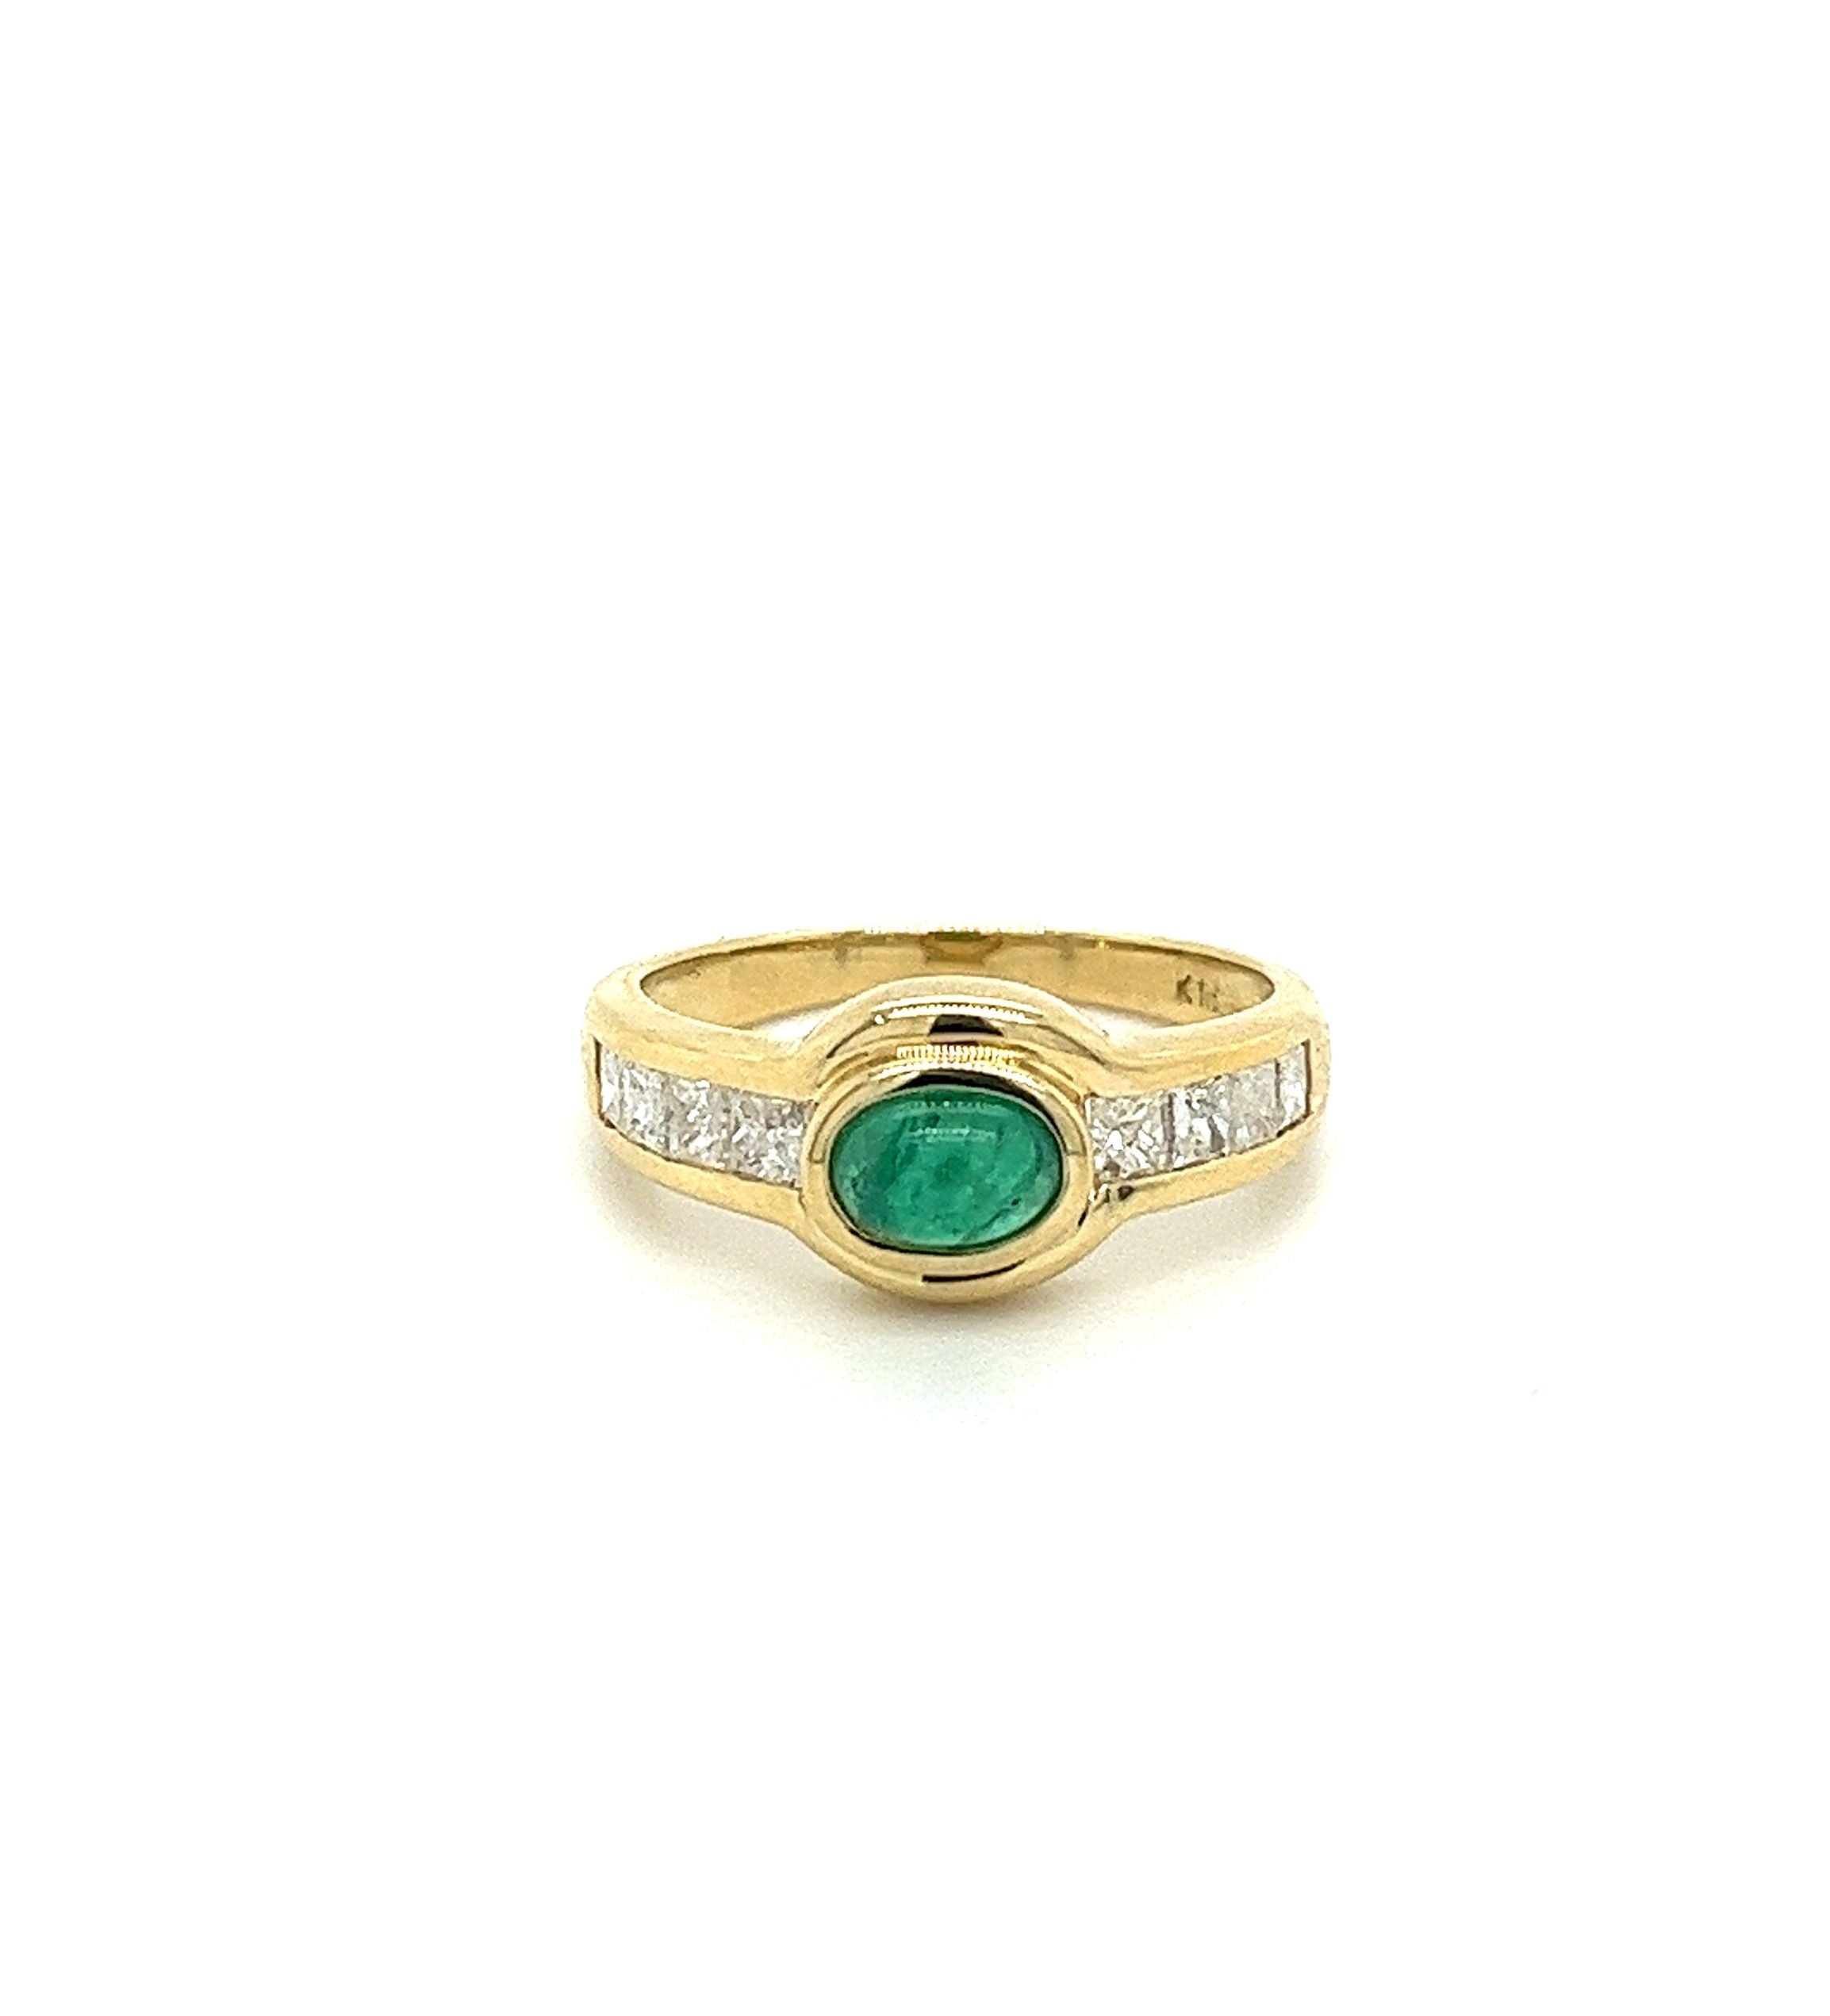 Natural-Emerald-Bezel-Set-Cabochon-Cut-Ring-With-Princess-Cut-Diamonds-in-18K-Yellow-Gold-Rings.jpg